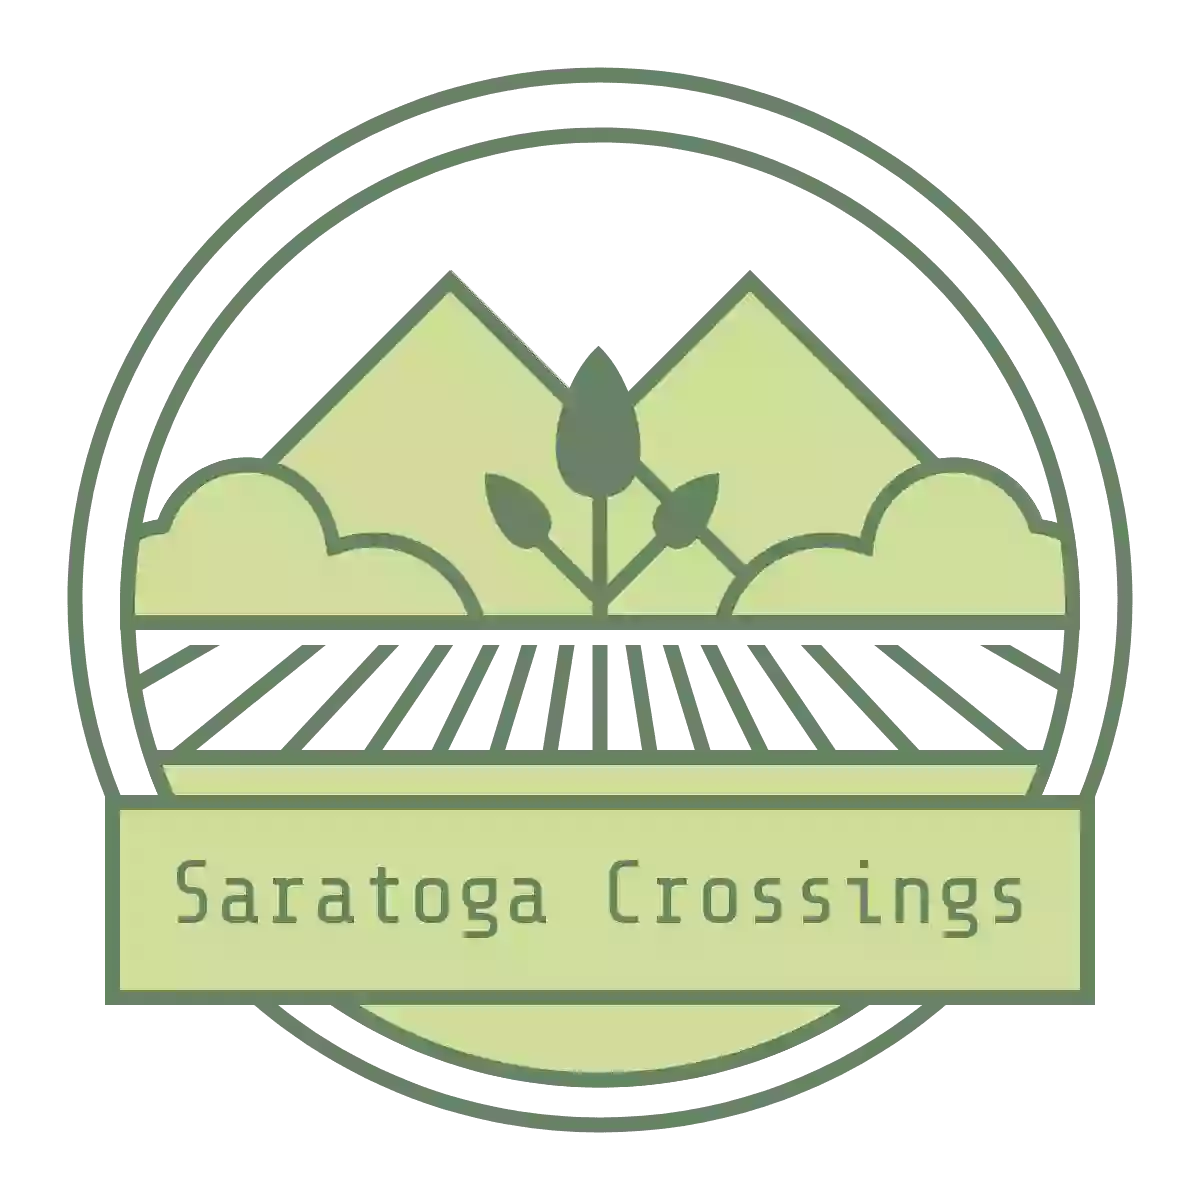 Saratoga Crossings